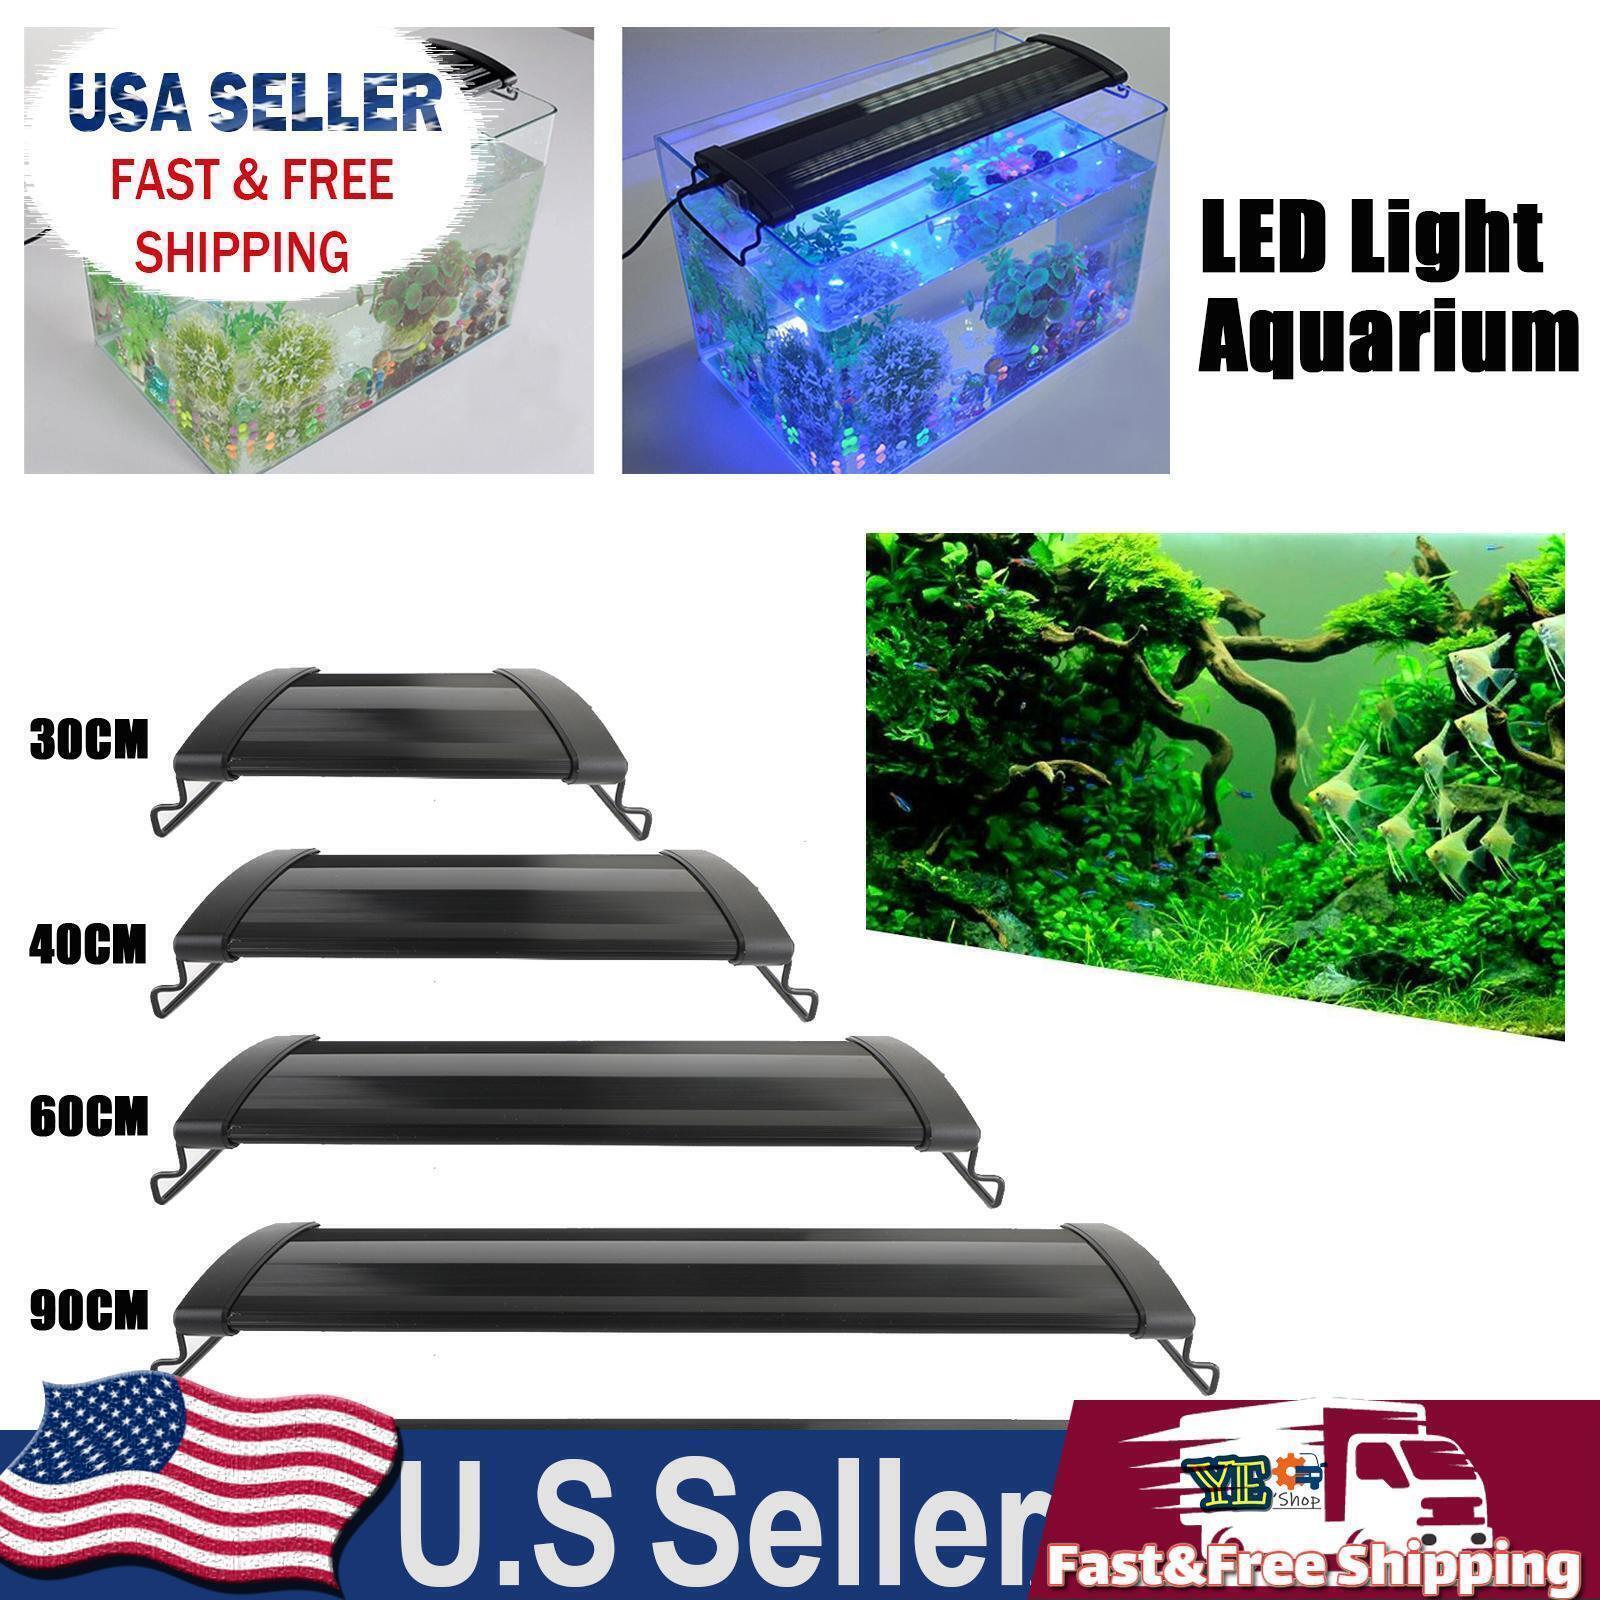 12"-48" LED Light Aquarium Fish Tank 0.5W Full Spectrum Plant Marine Black USA Artudatech Does not apply